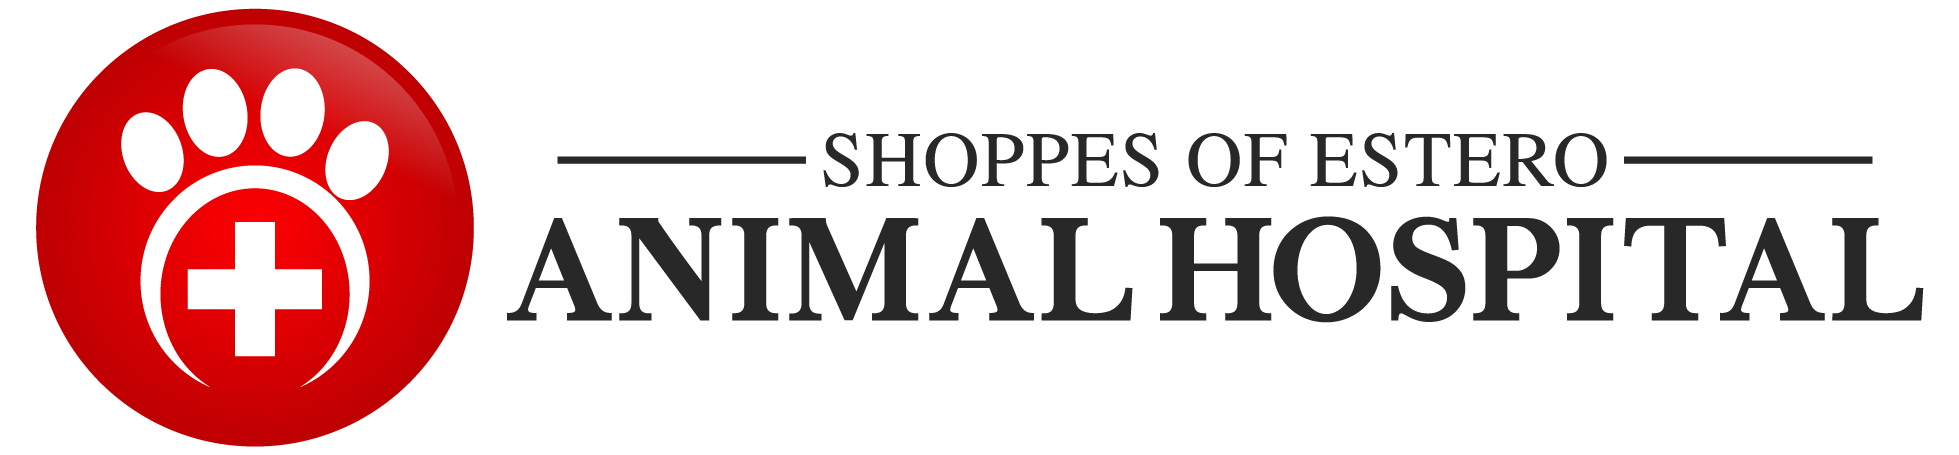 Shoppes of Estero Animal Hospital